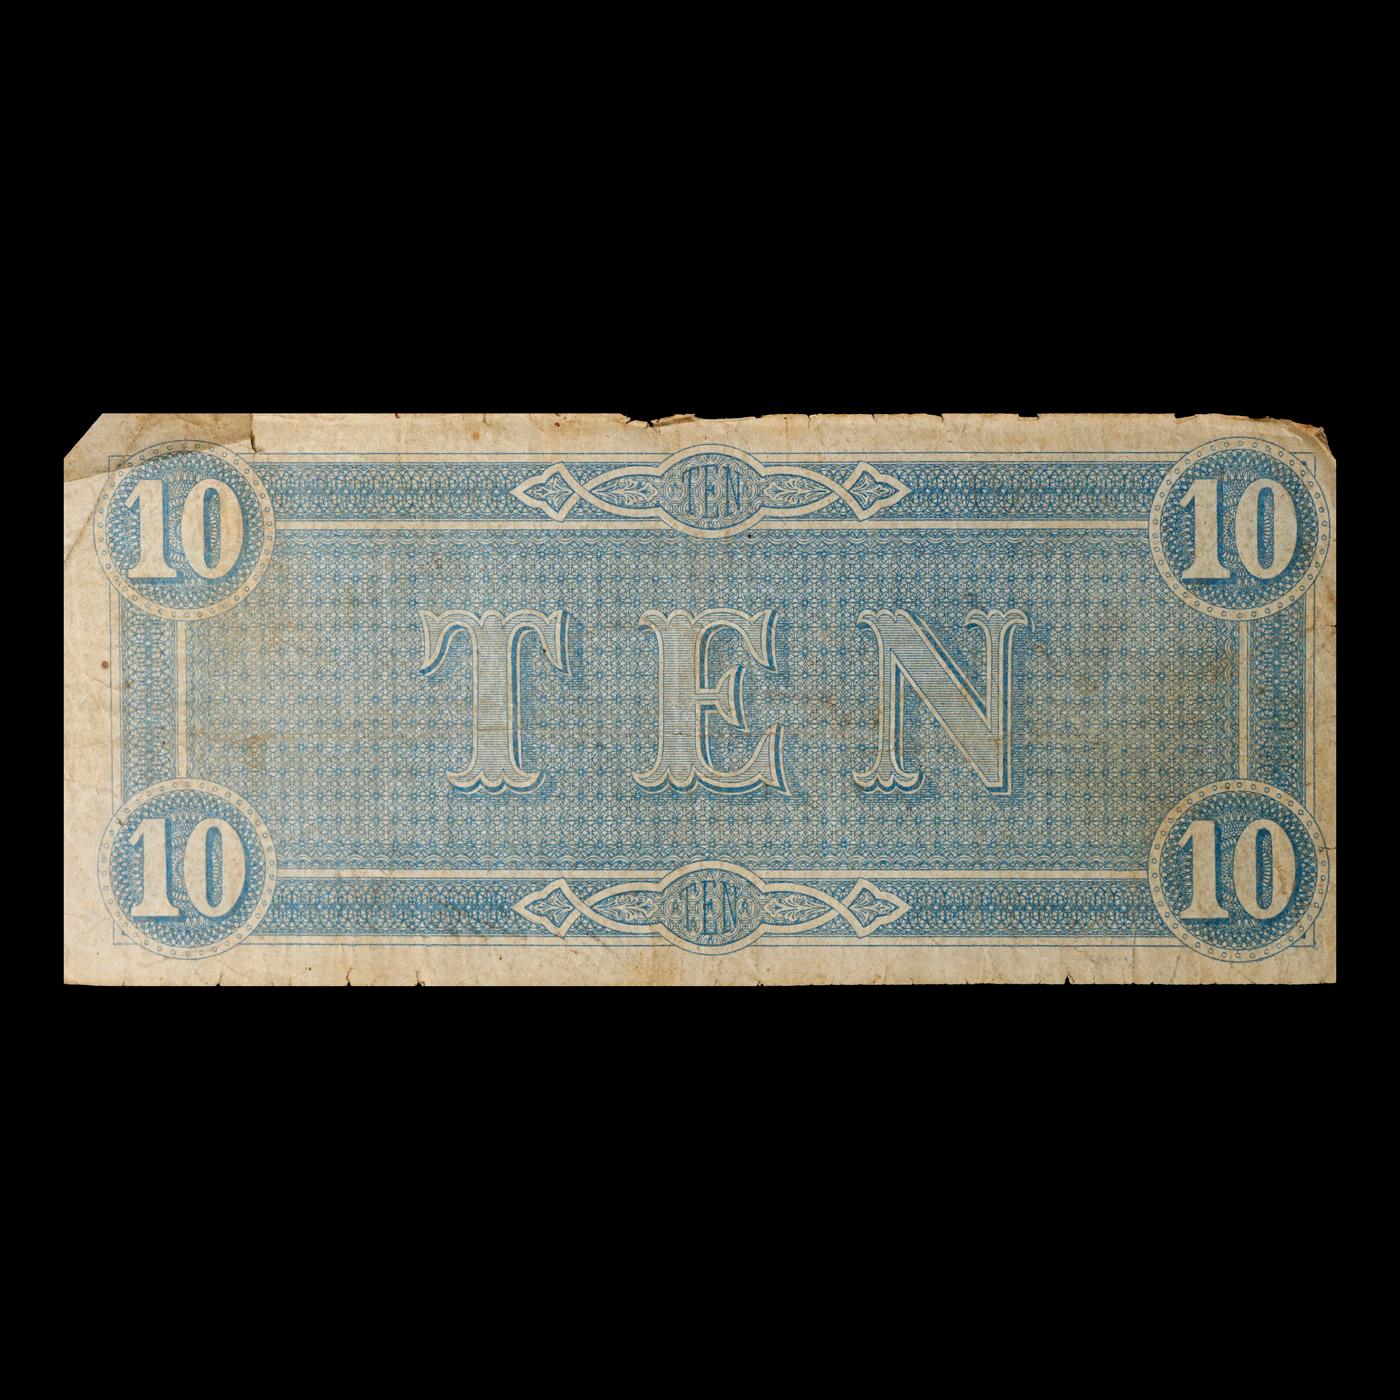 1864 $10 Confederate States Note, T68 Grades Select AU